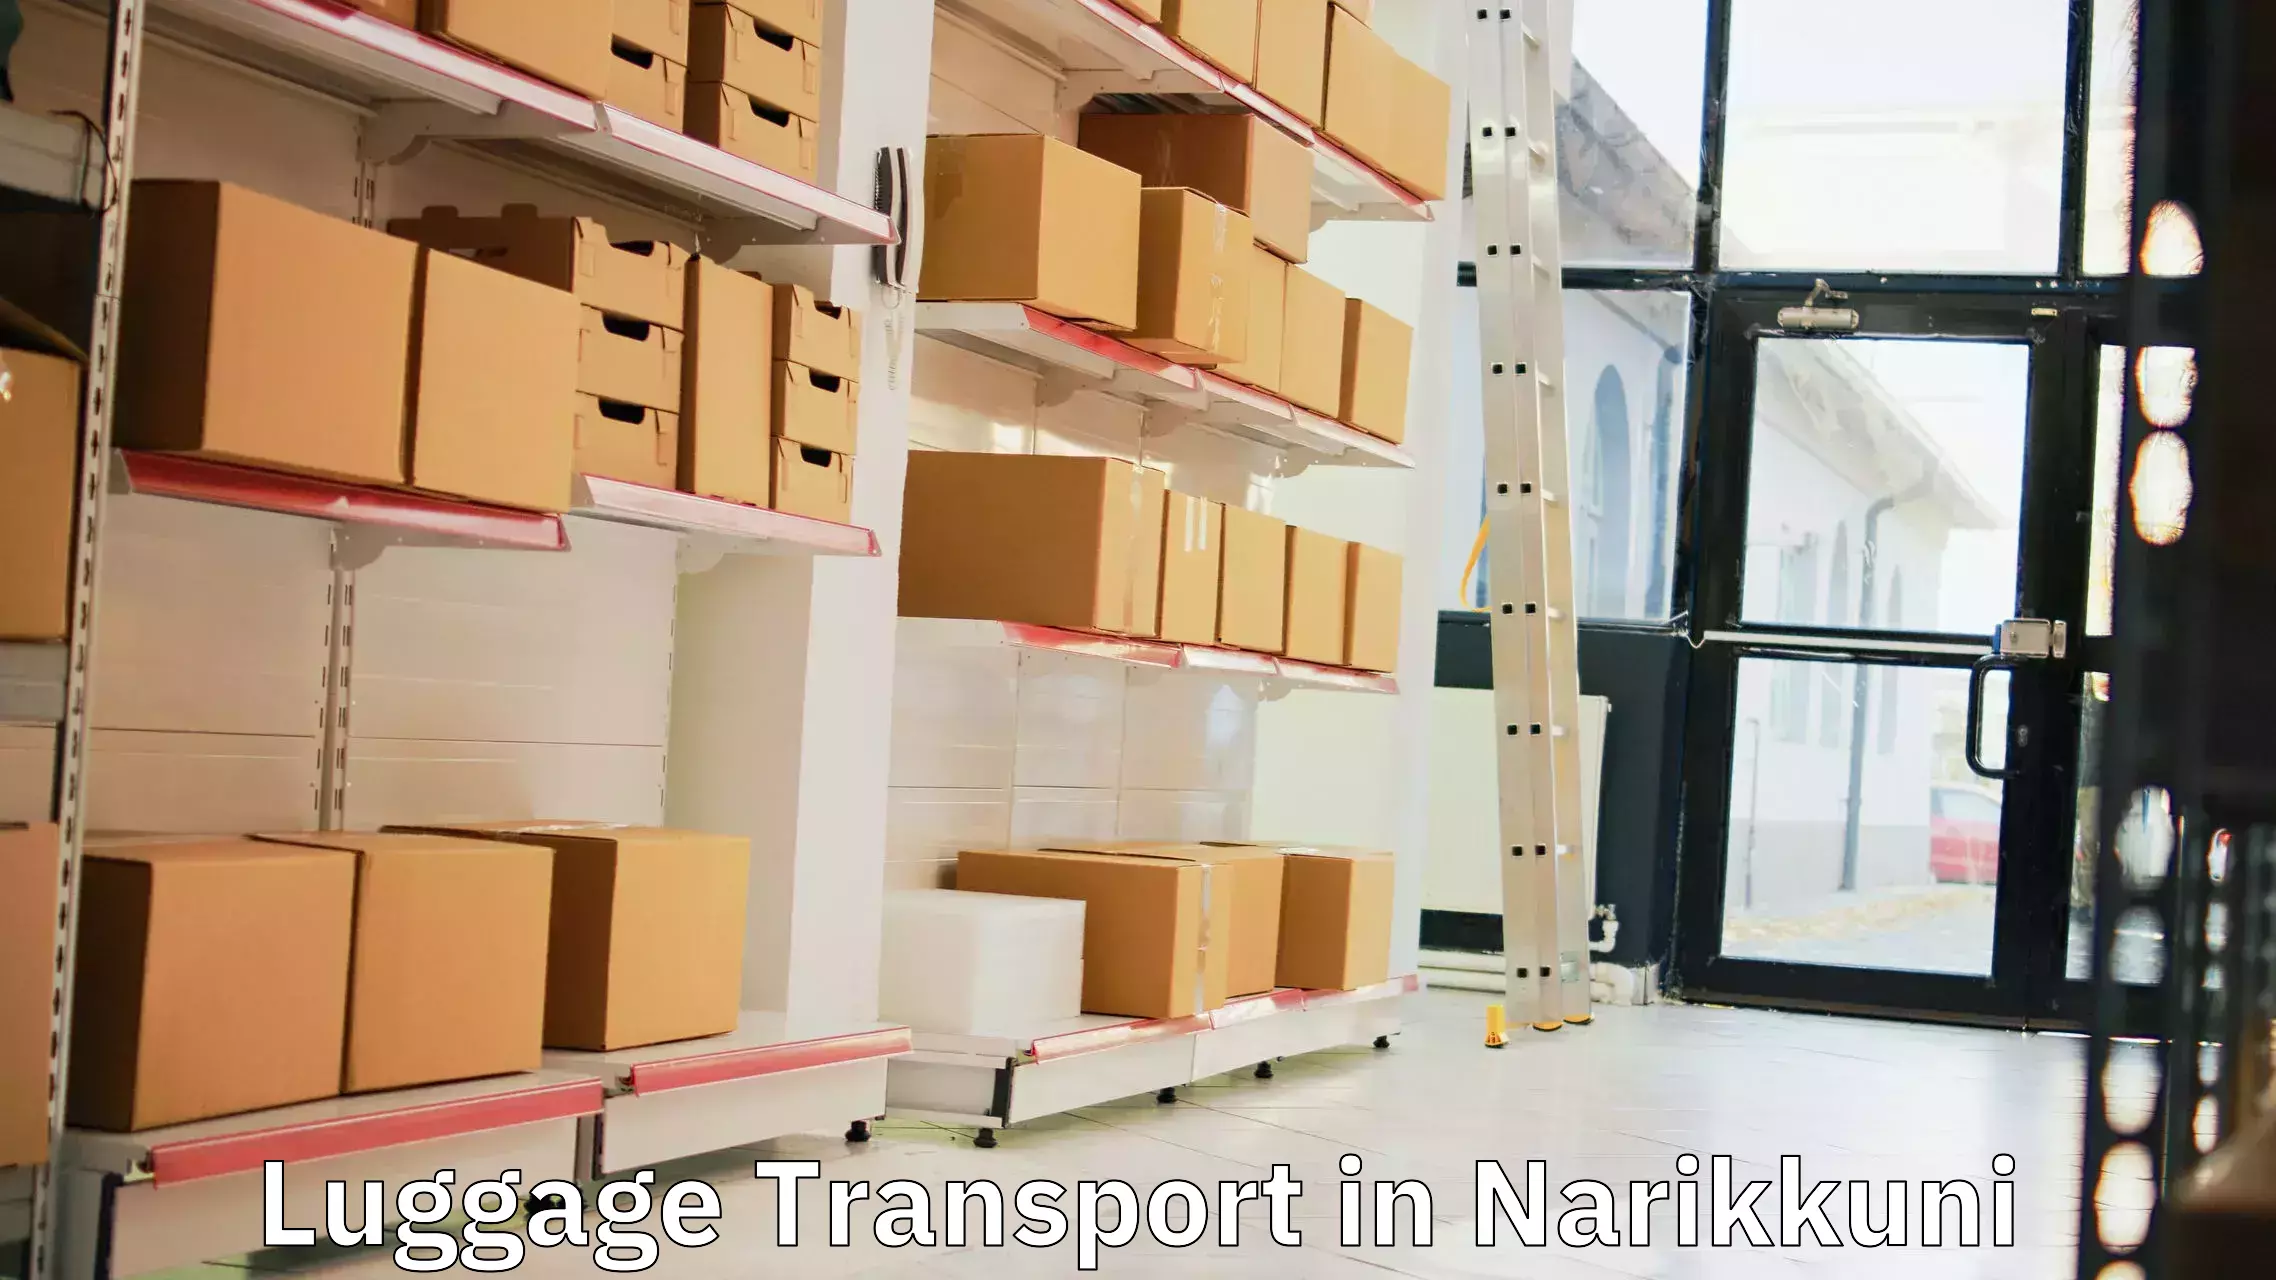 Business luggage transport in Narikkuni